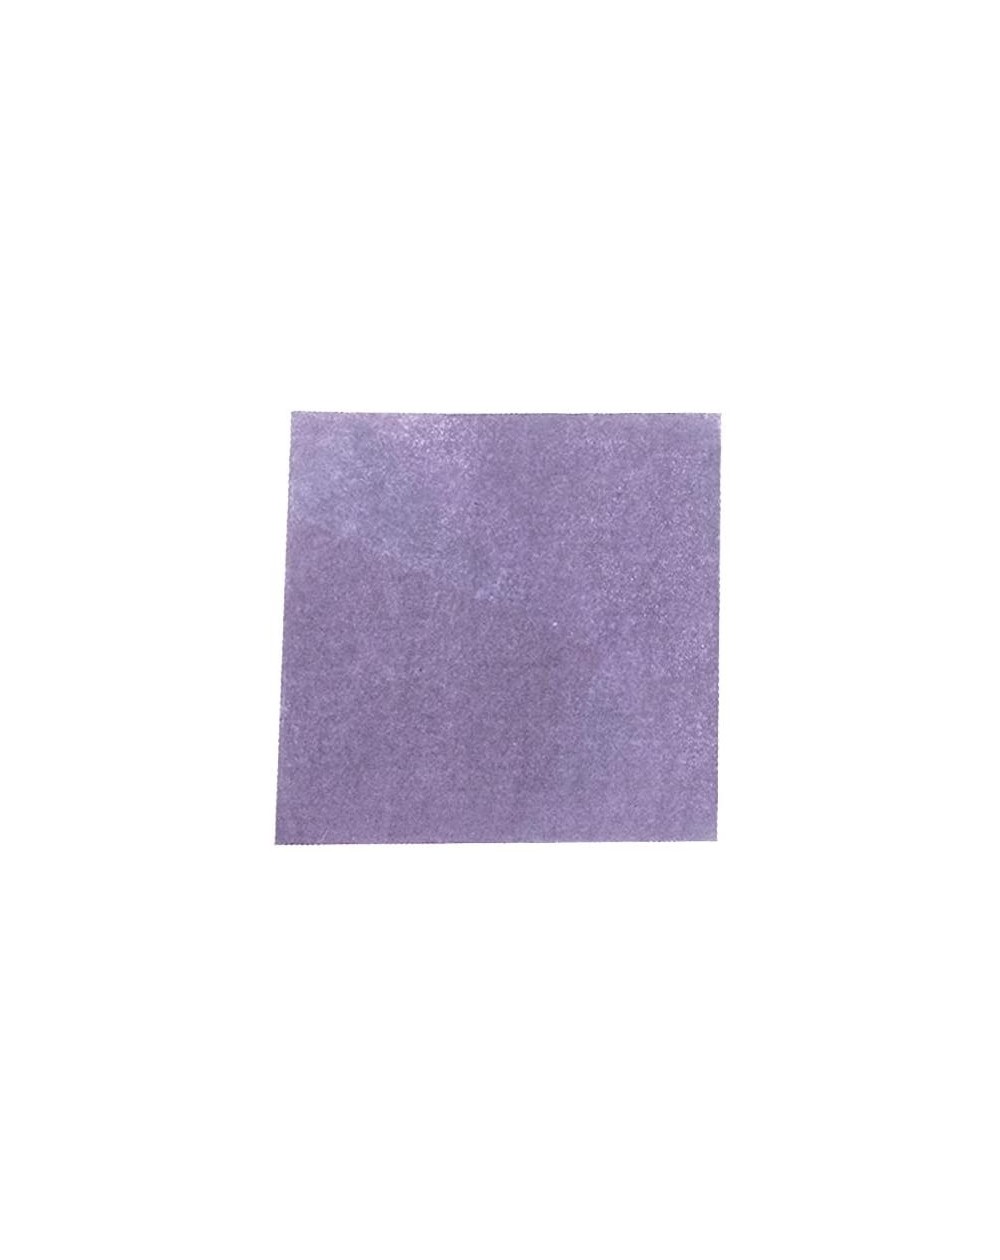 Tissue Pom Poms Lavender Tissue Parade Float Pomps Pack of 300-5-1/2 Inch Square Sheets - Lavender - CW184AI6O4R $8.06